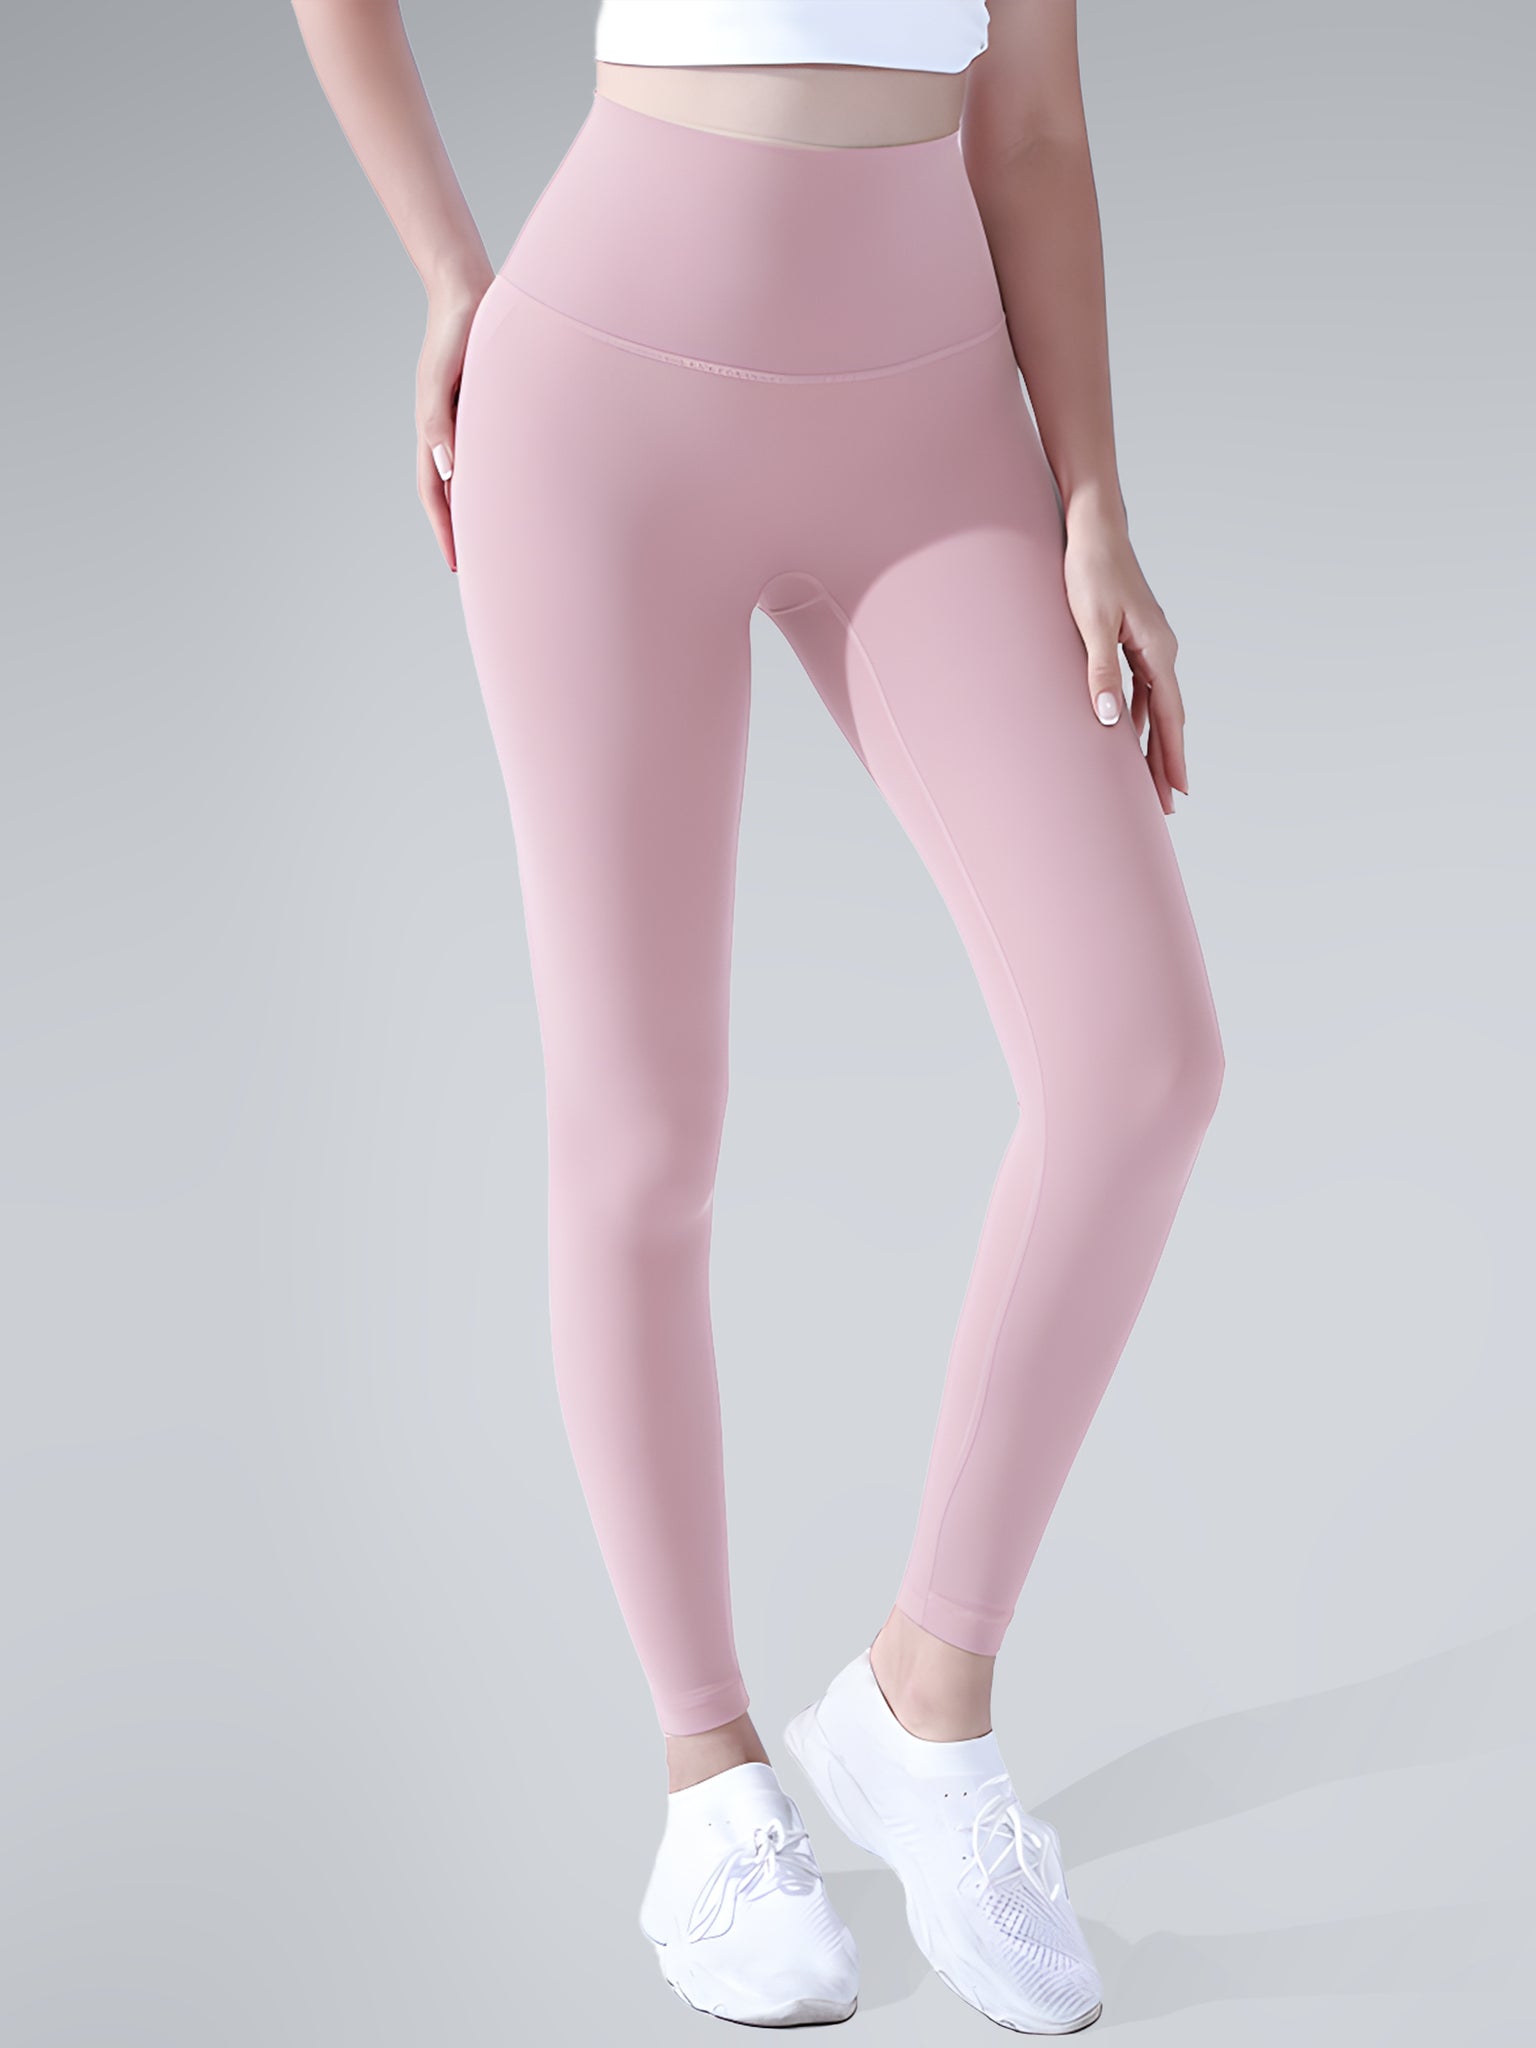 Ultra Seamless Leggings - Pink: High-Waist, Stylish Activewear